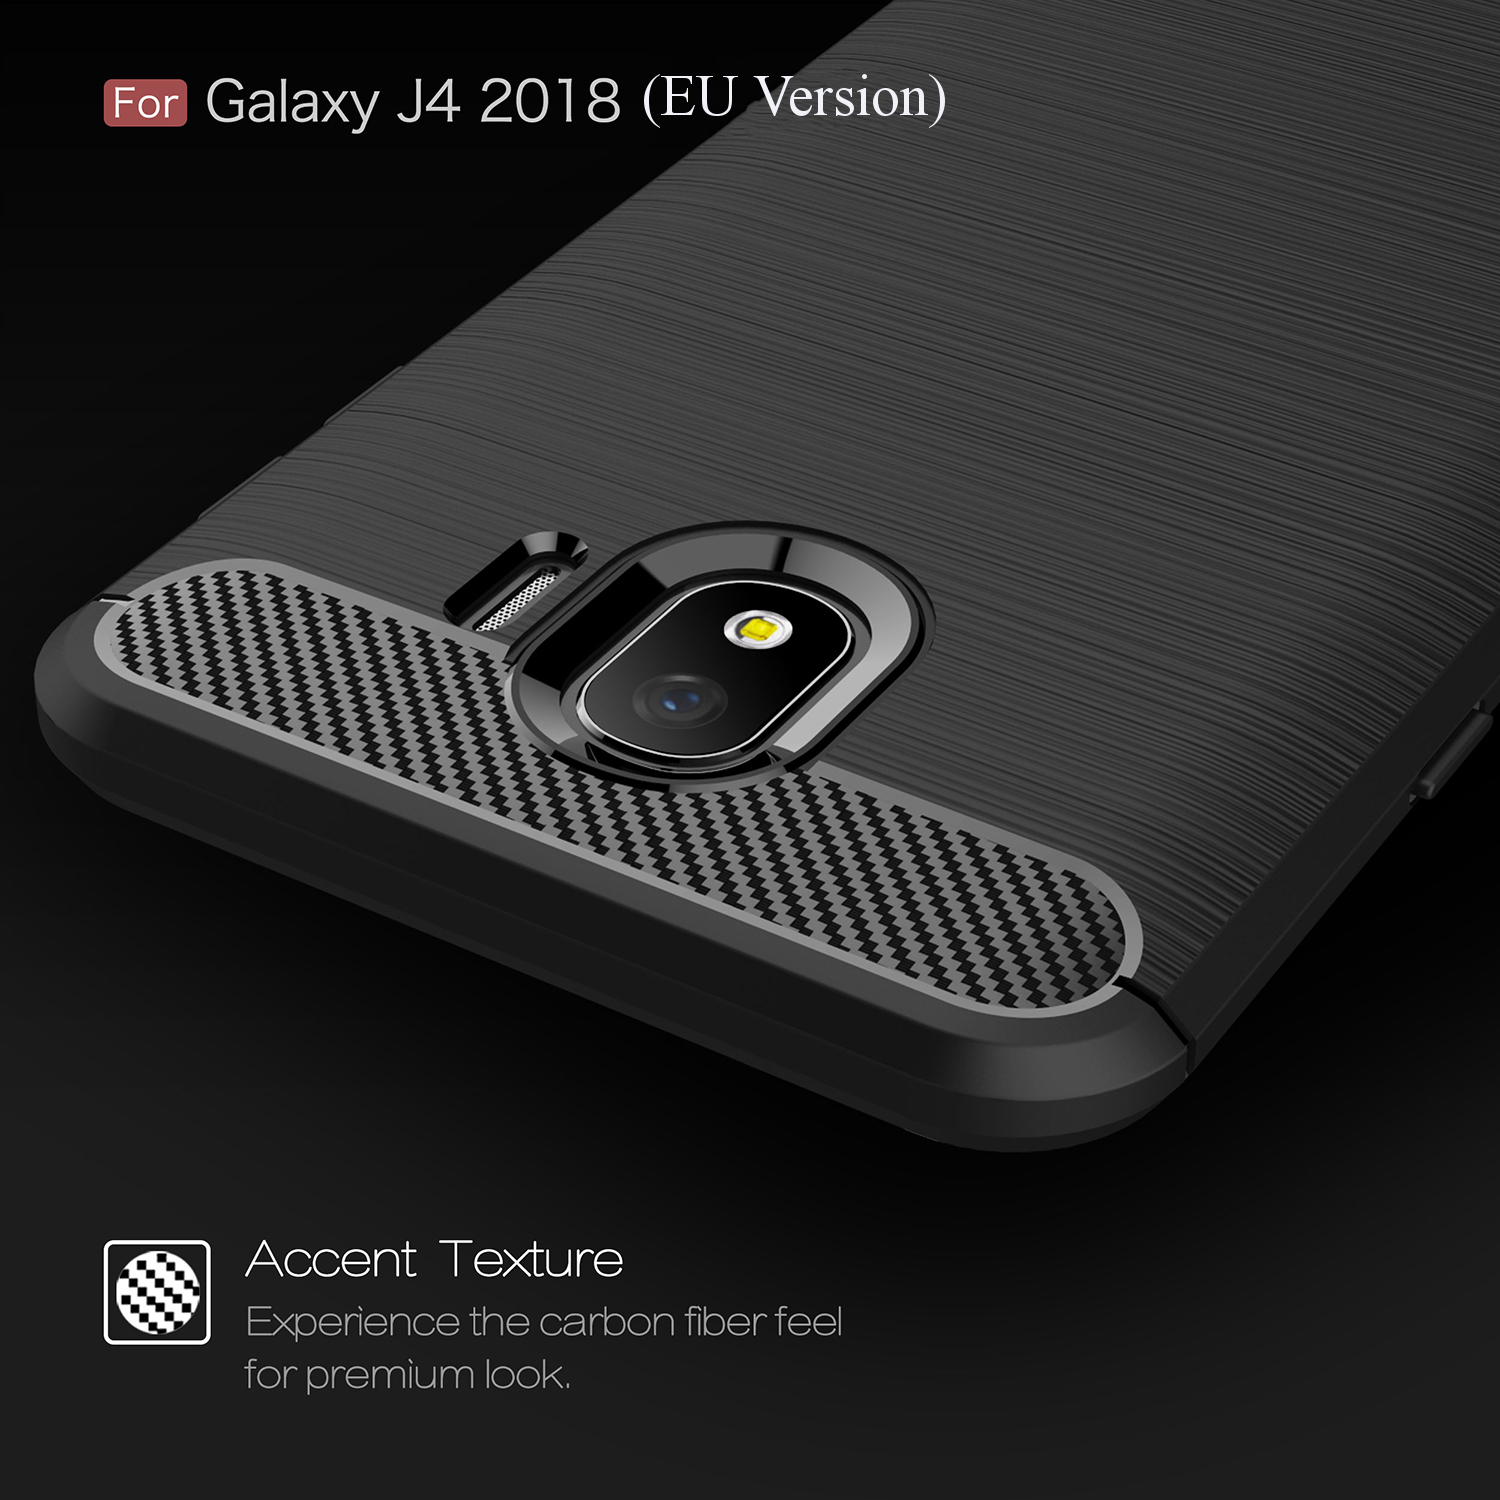 Bakeey-Carbon-Fiber-Heat-Dissipation-Soft-TPU-Protective-Case-for-Samsung-Galaxy-J4-2018-EU-Version-1312378